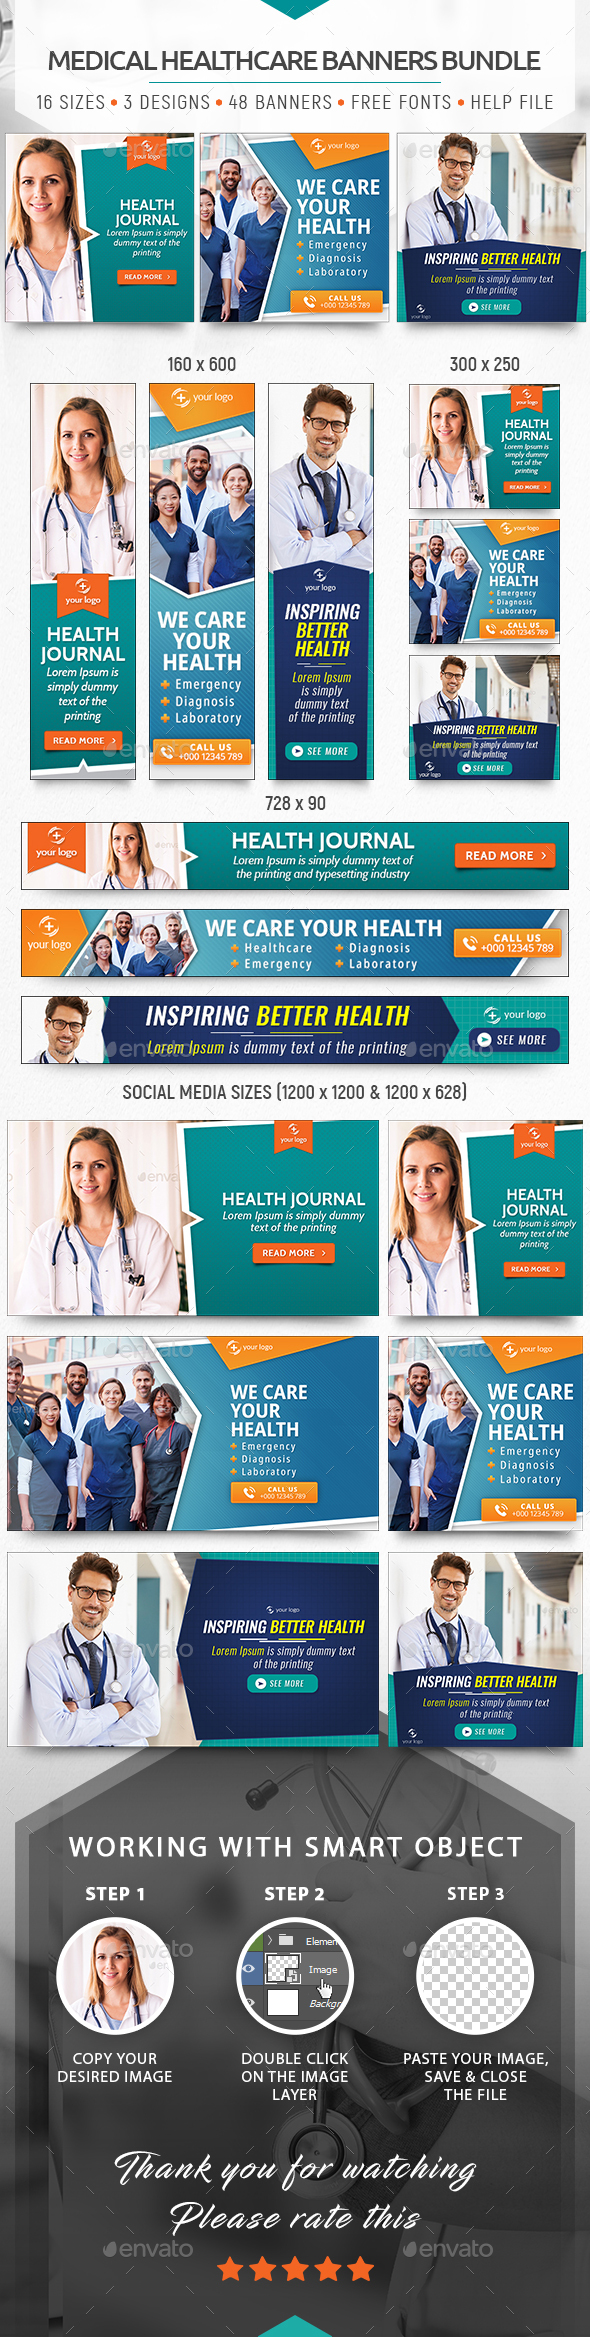 Medical Healthcare Banners Bundle